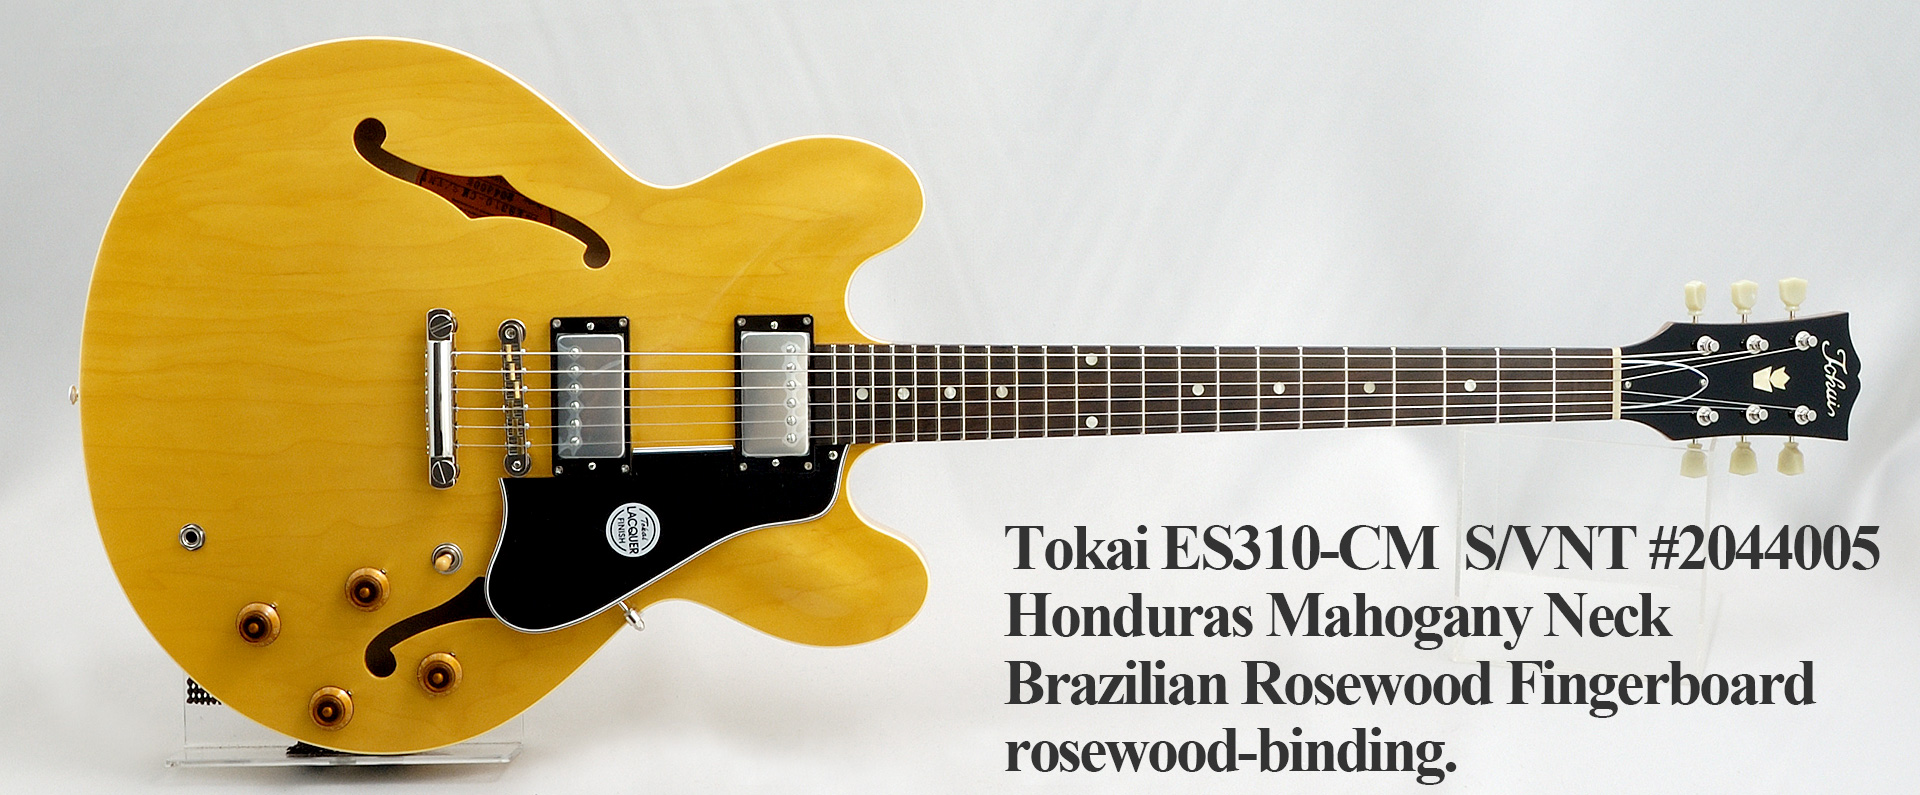 Tokai ES310-CM/VNT #2044005 rosewood-binding, Honduras Mahogany 